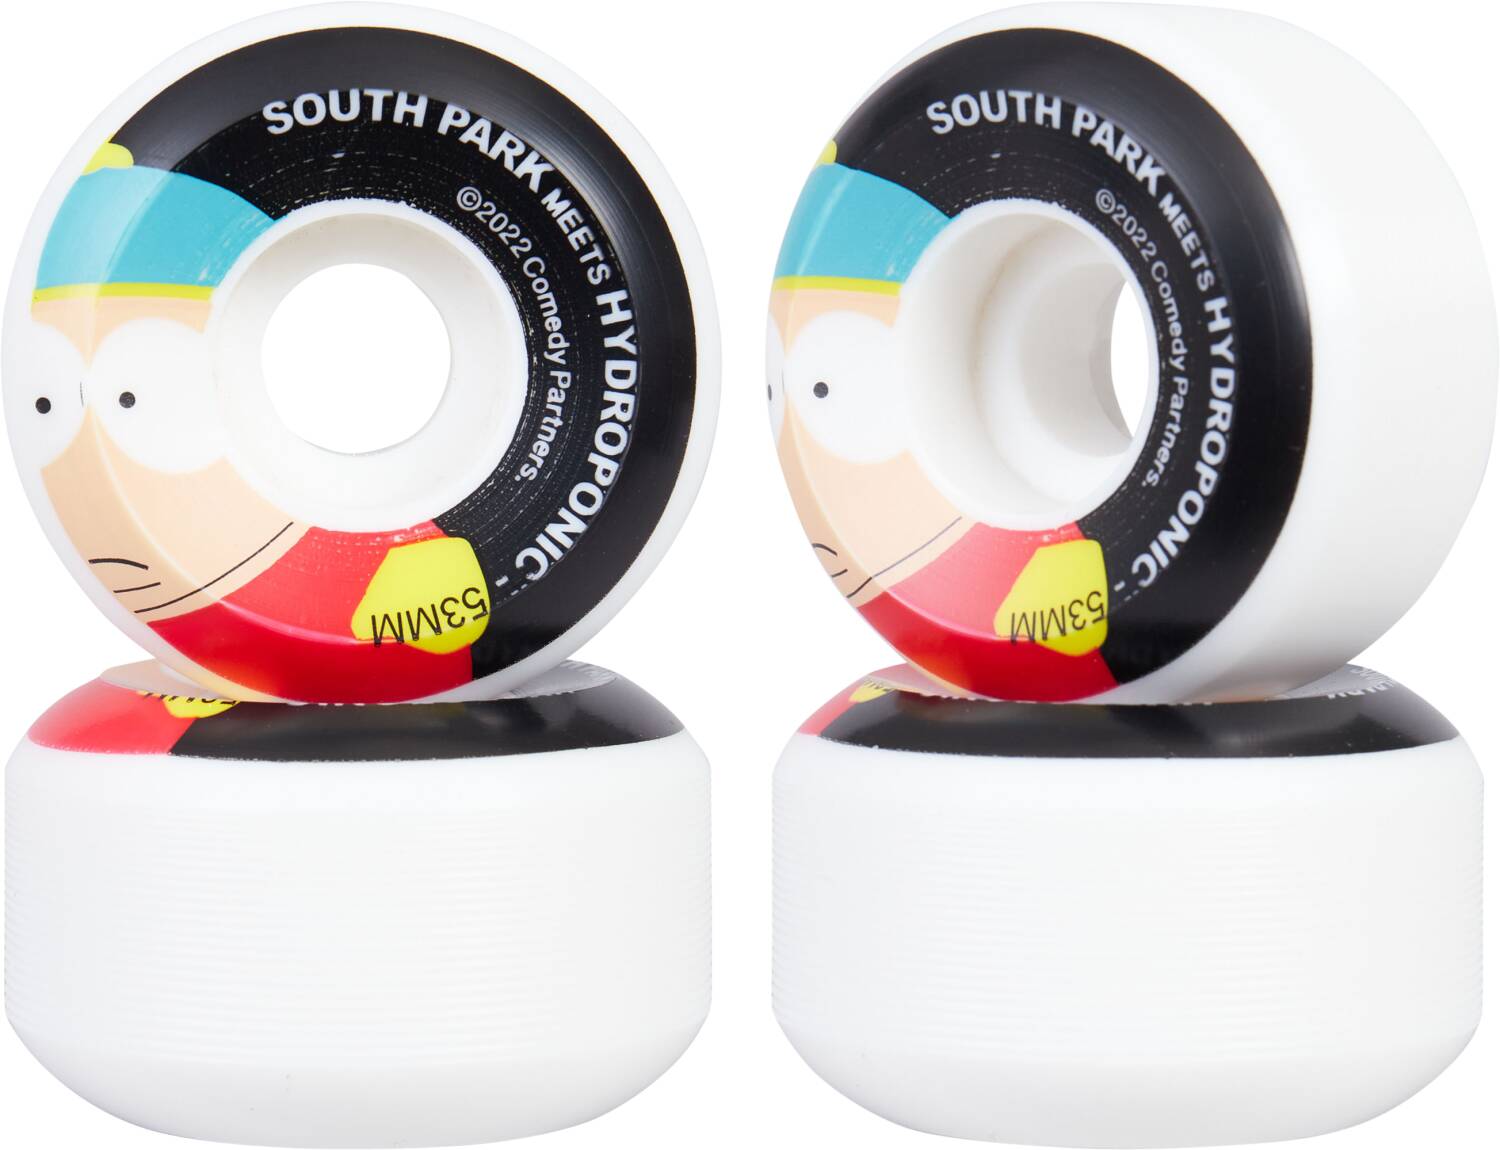 Hydroponic South Park Skateboard Wheels 4-Pack - SeasideBMX - Hydroponic